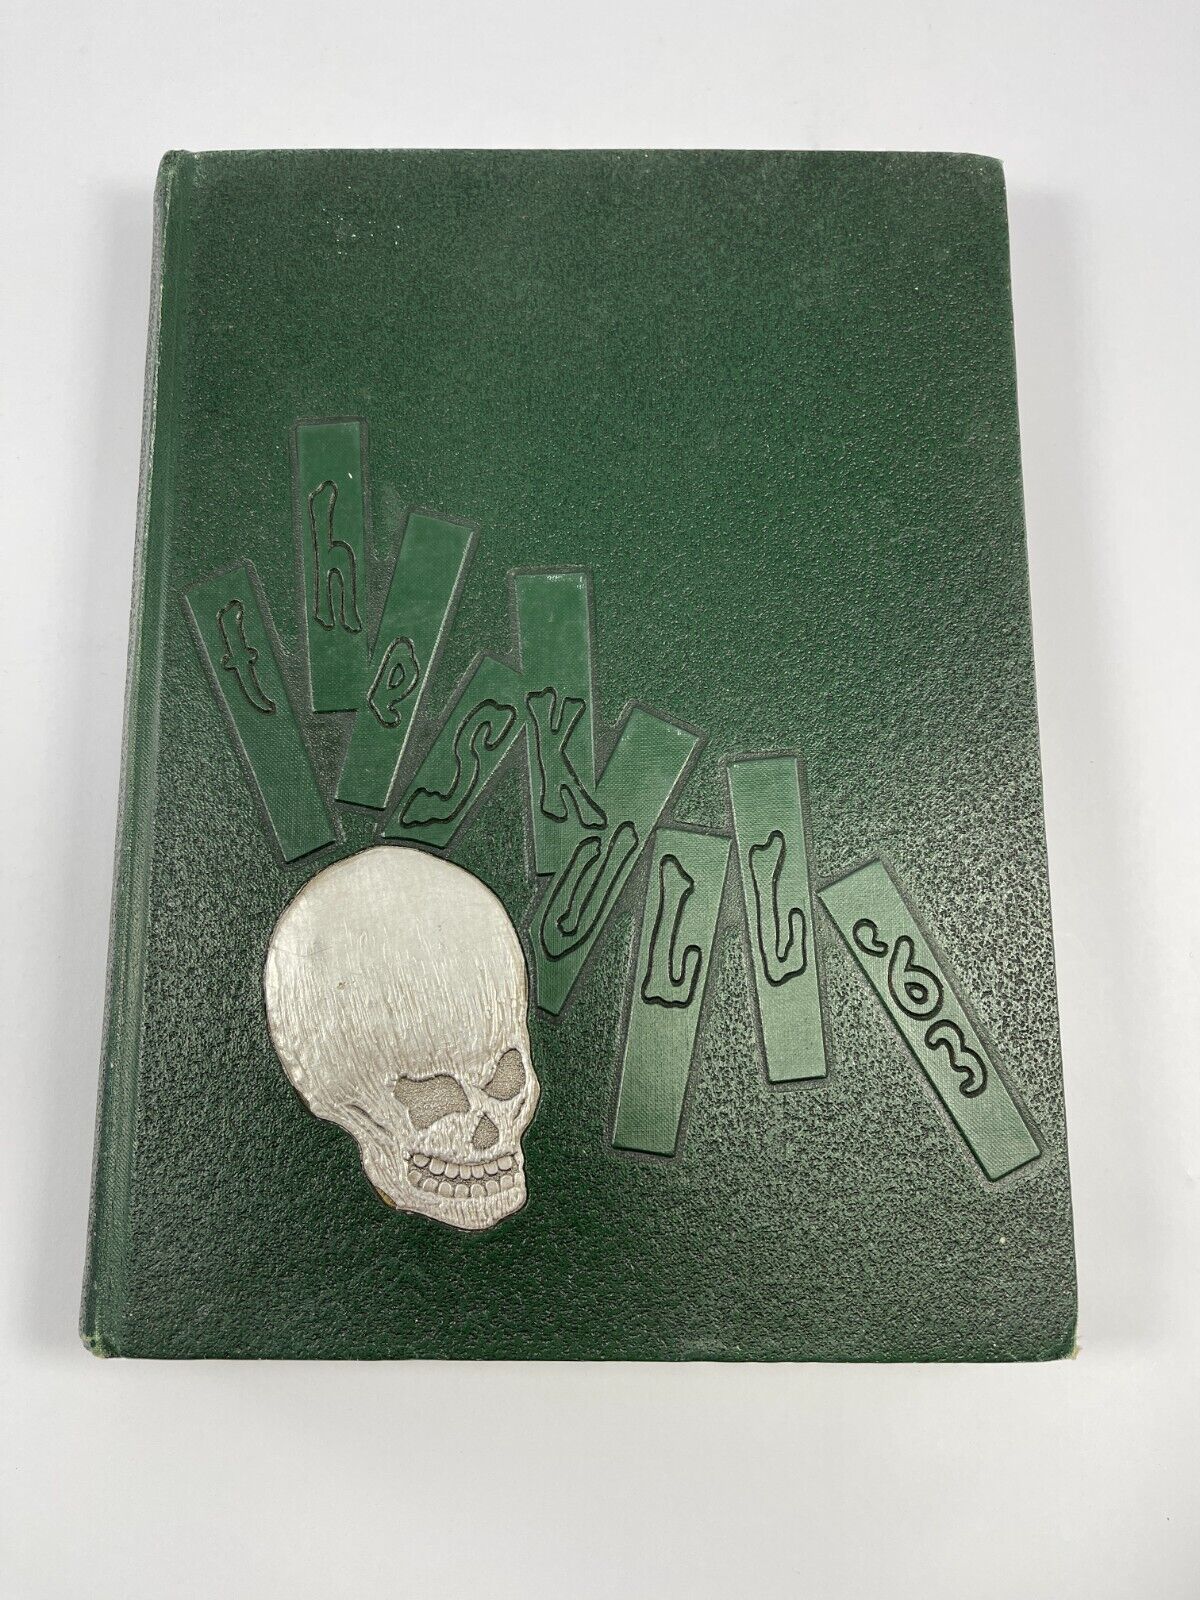 The Skull 1963 Temple University Medical School Yearbook